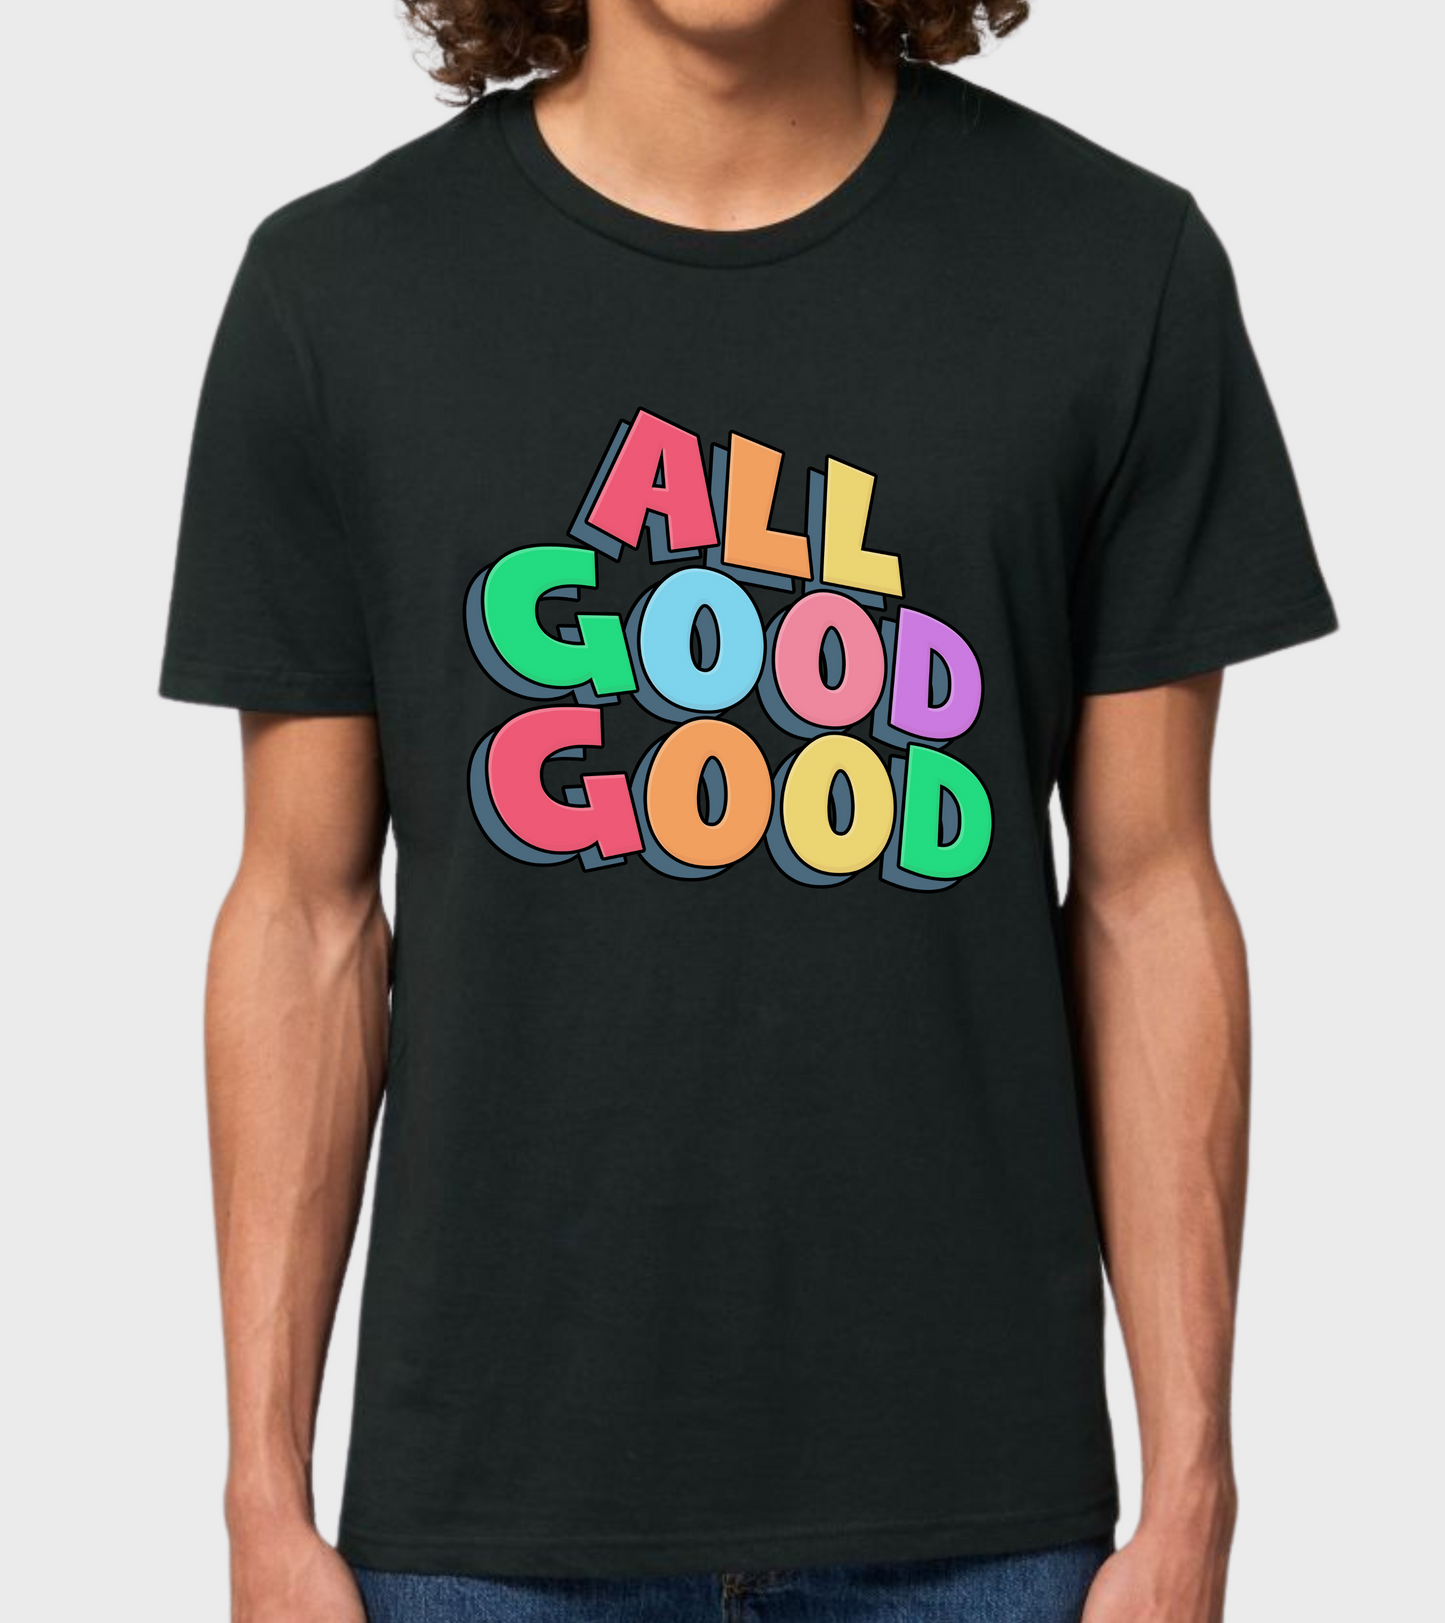 Black regular fit t-shirt with 'ALL GOOD GOOD' design.